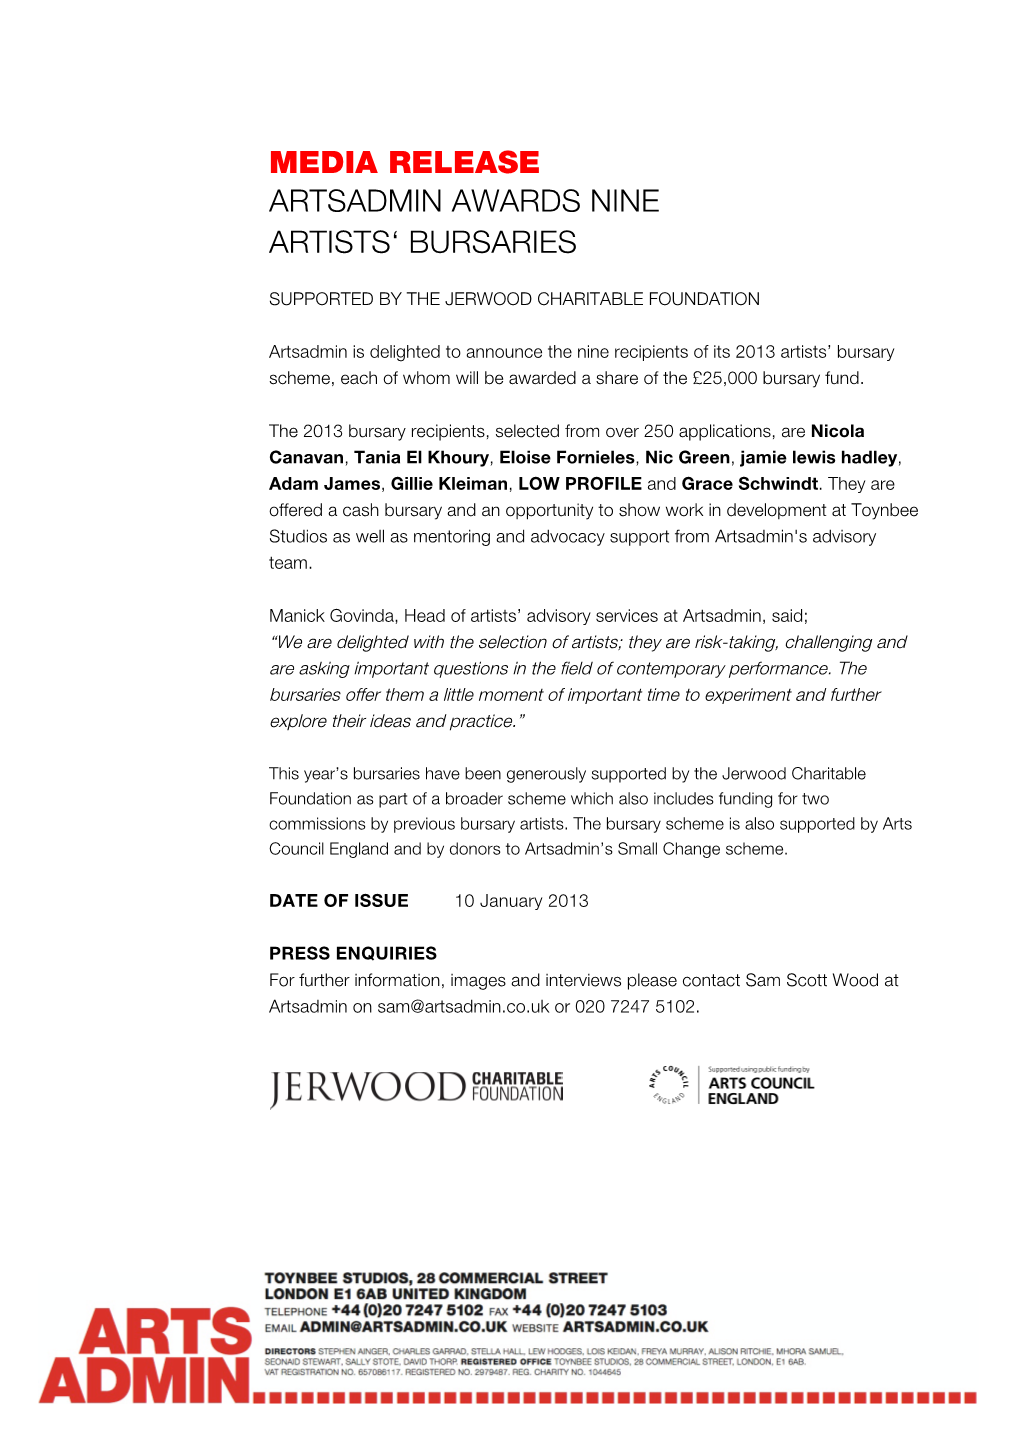 Artsadmin Awards Nine Artists' Bursaries